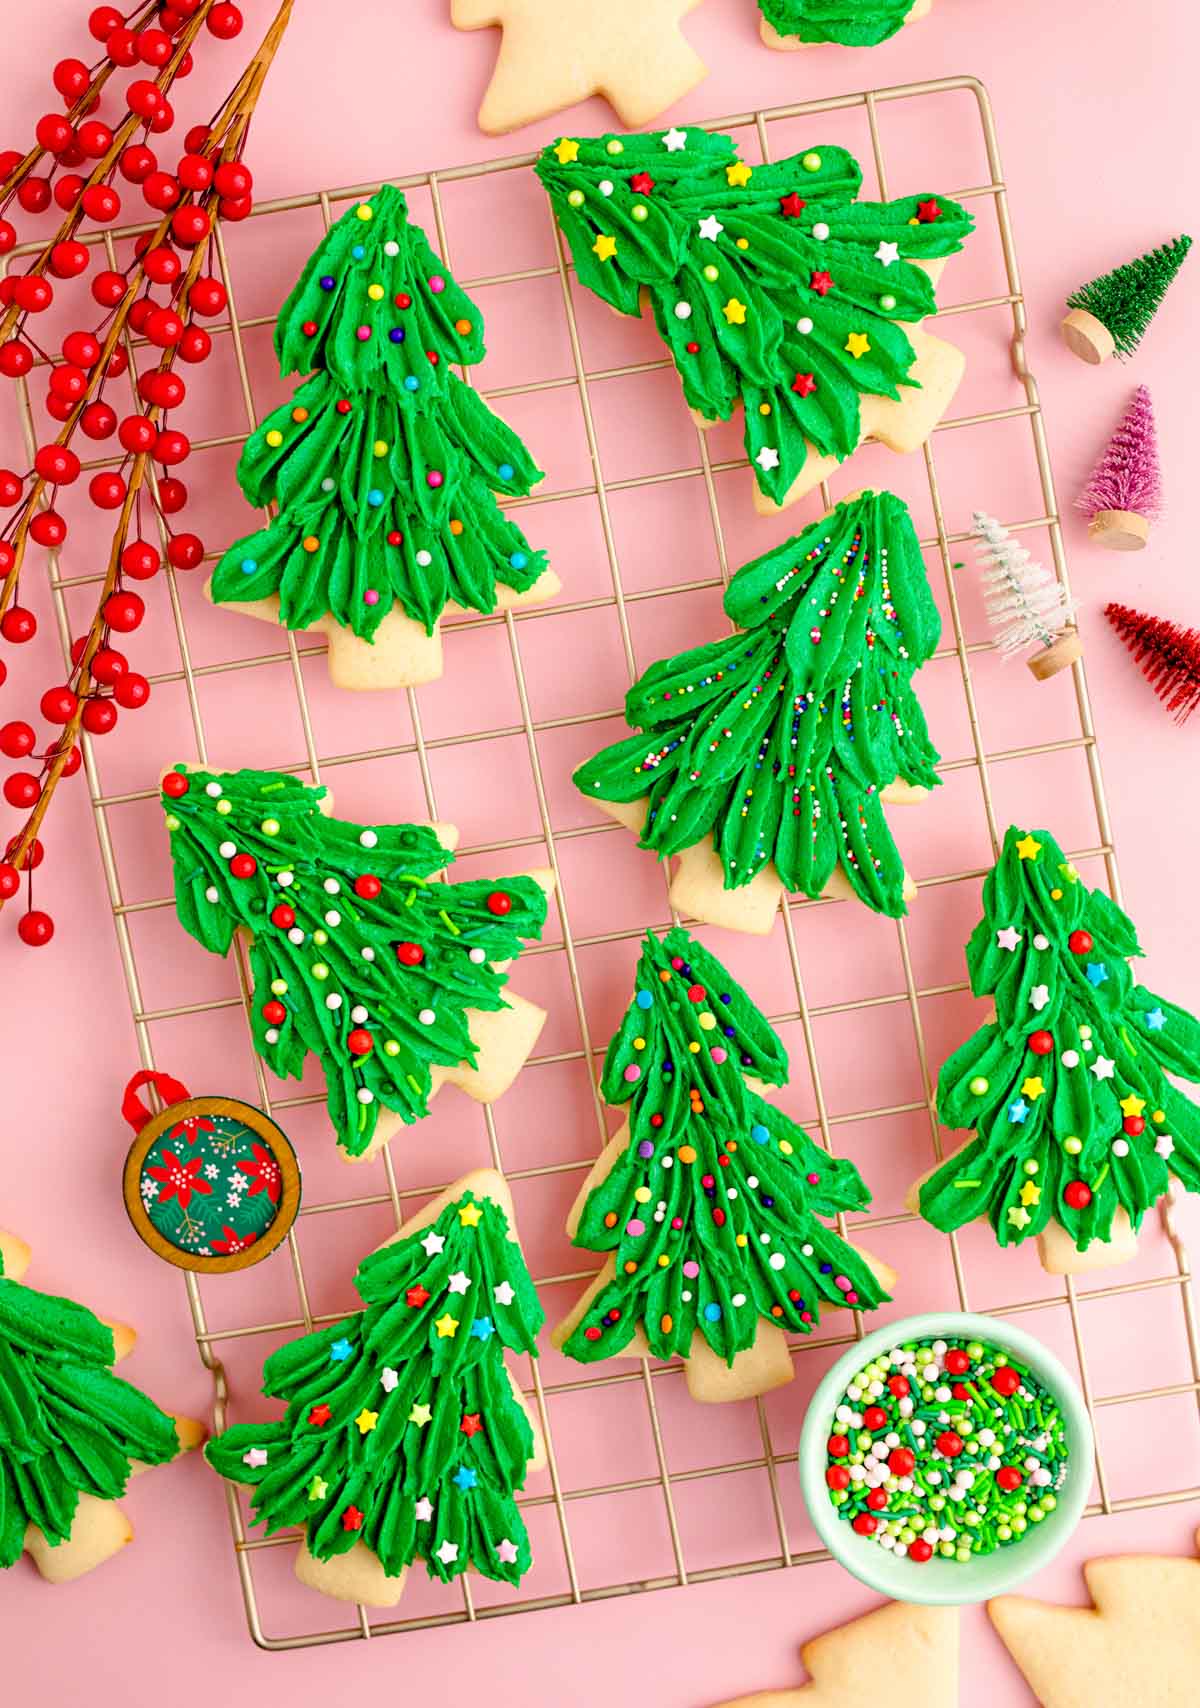 plate full of Christmas tree cookies with sprinkles